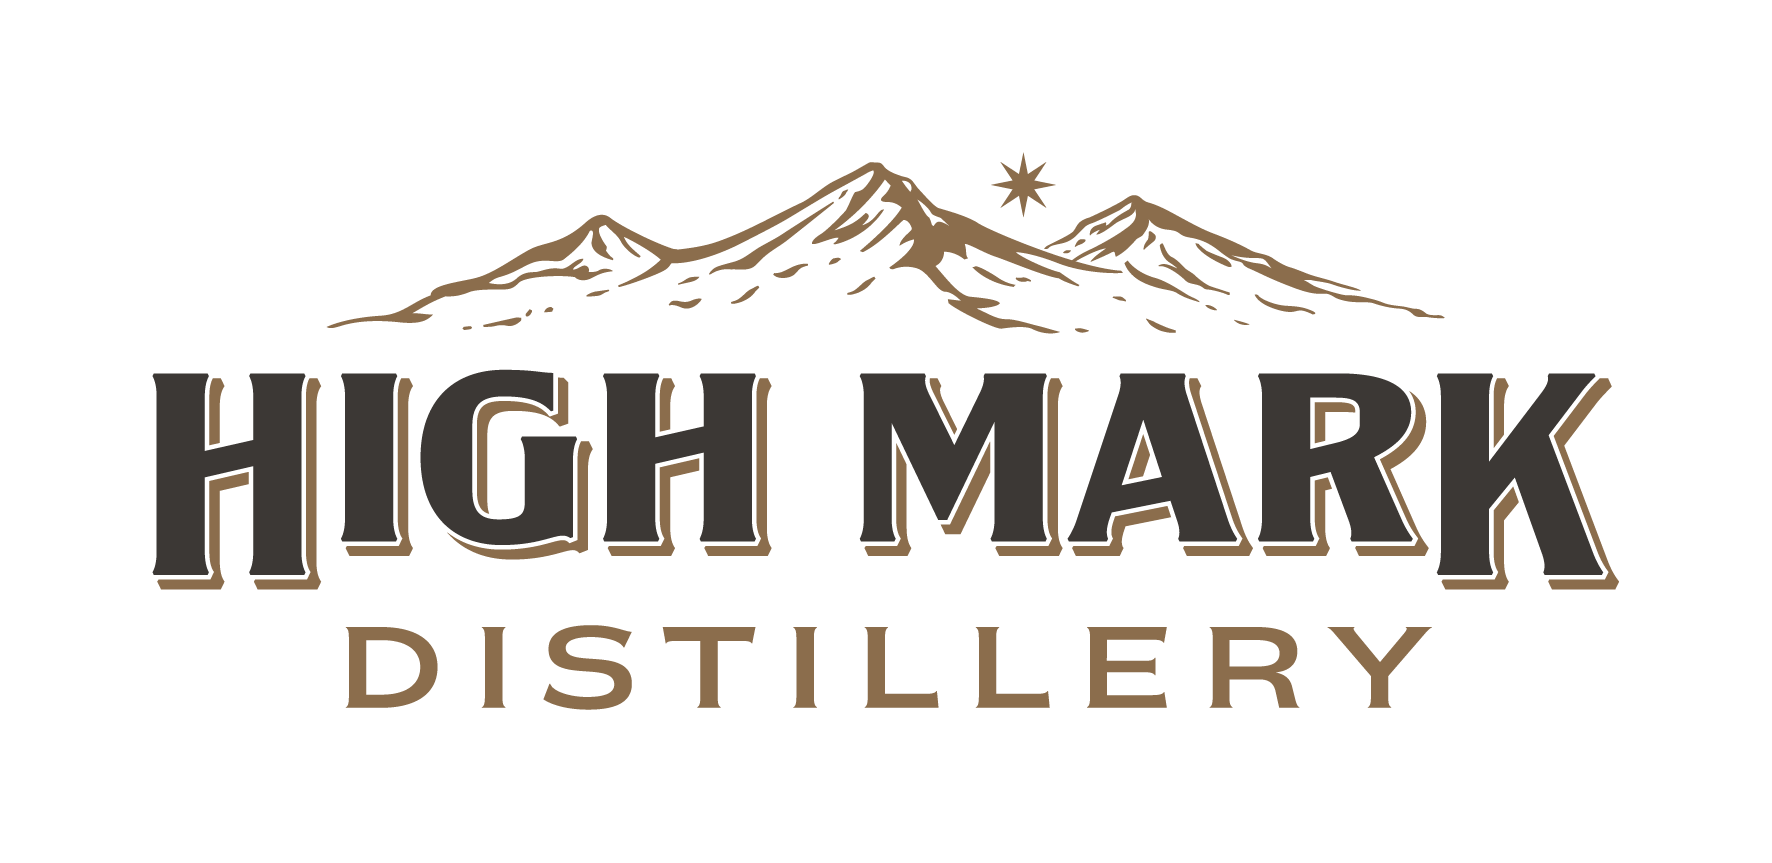 High Mark Distillery & Barrel House